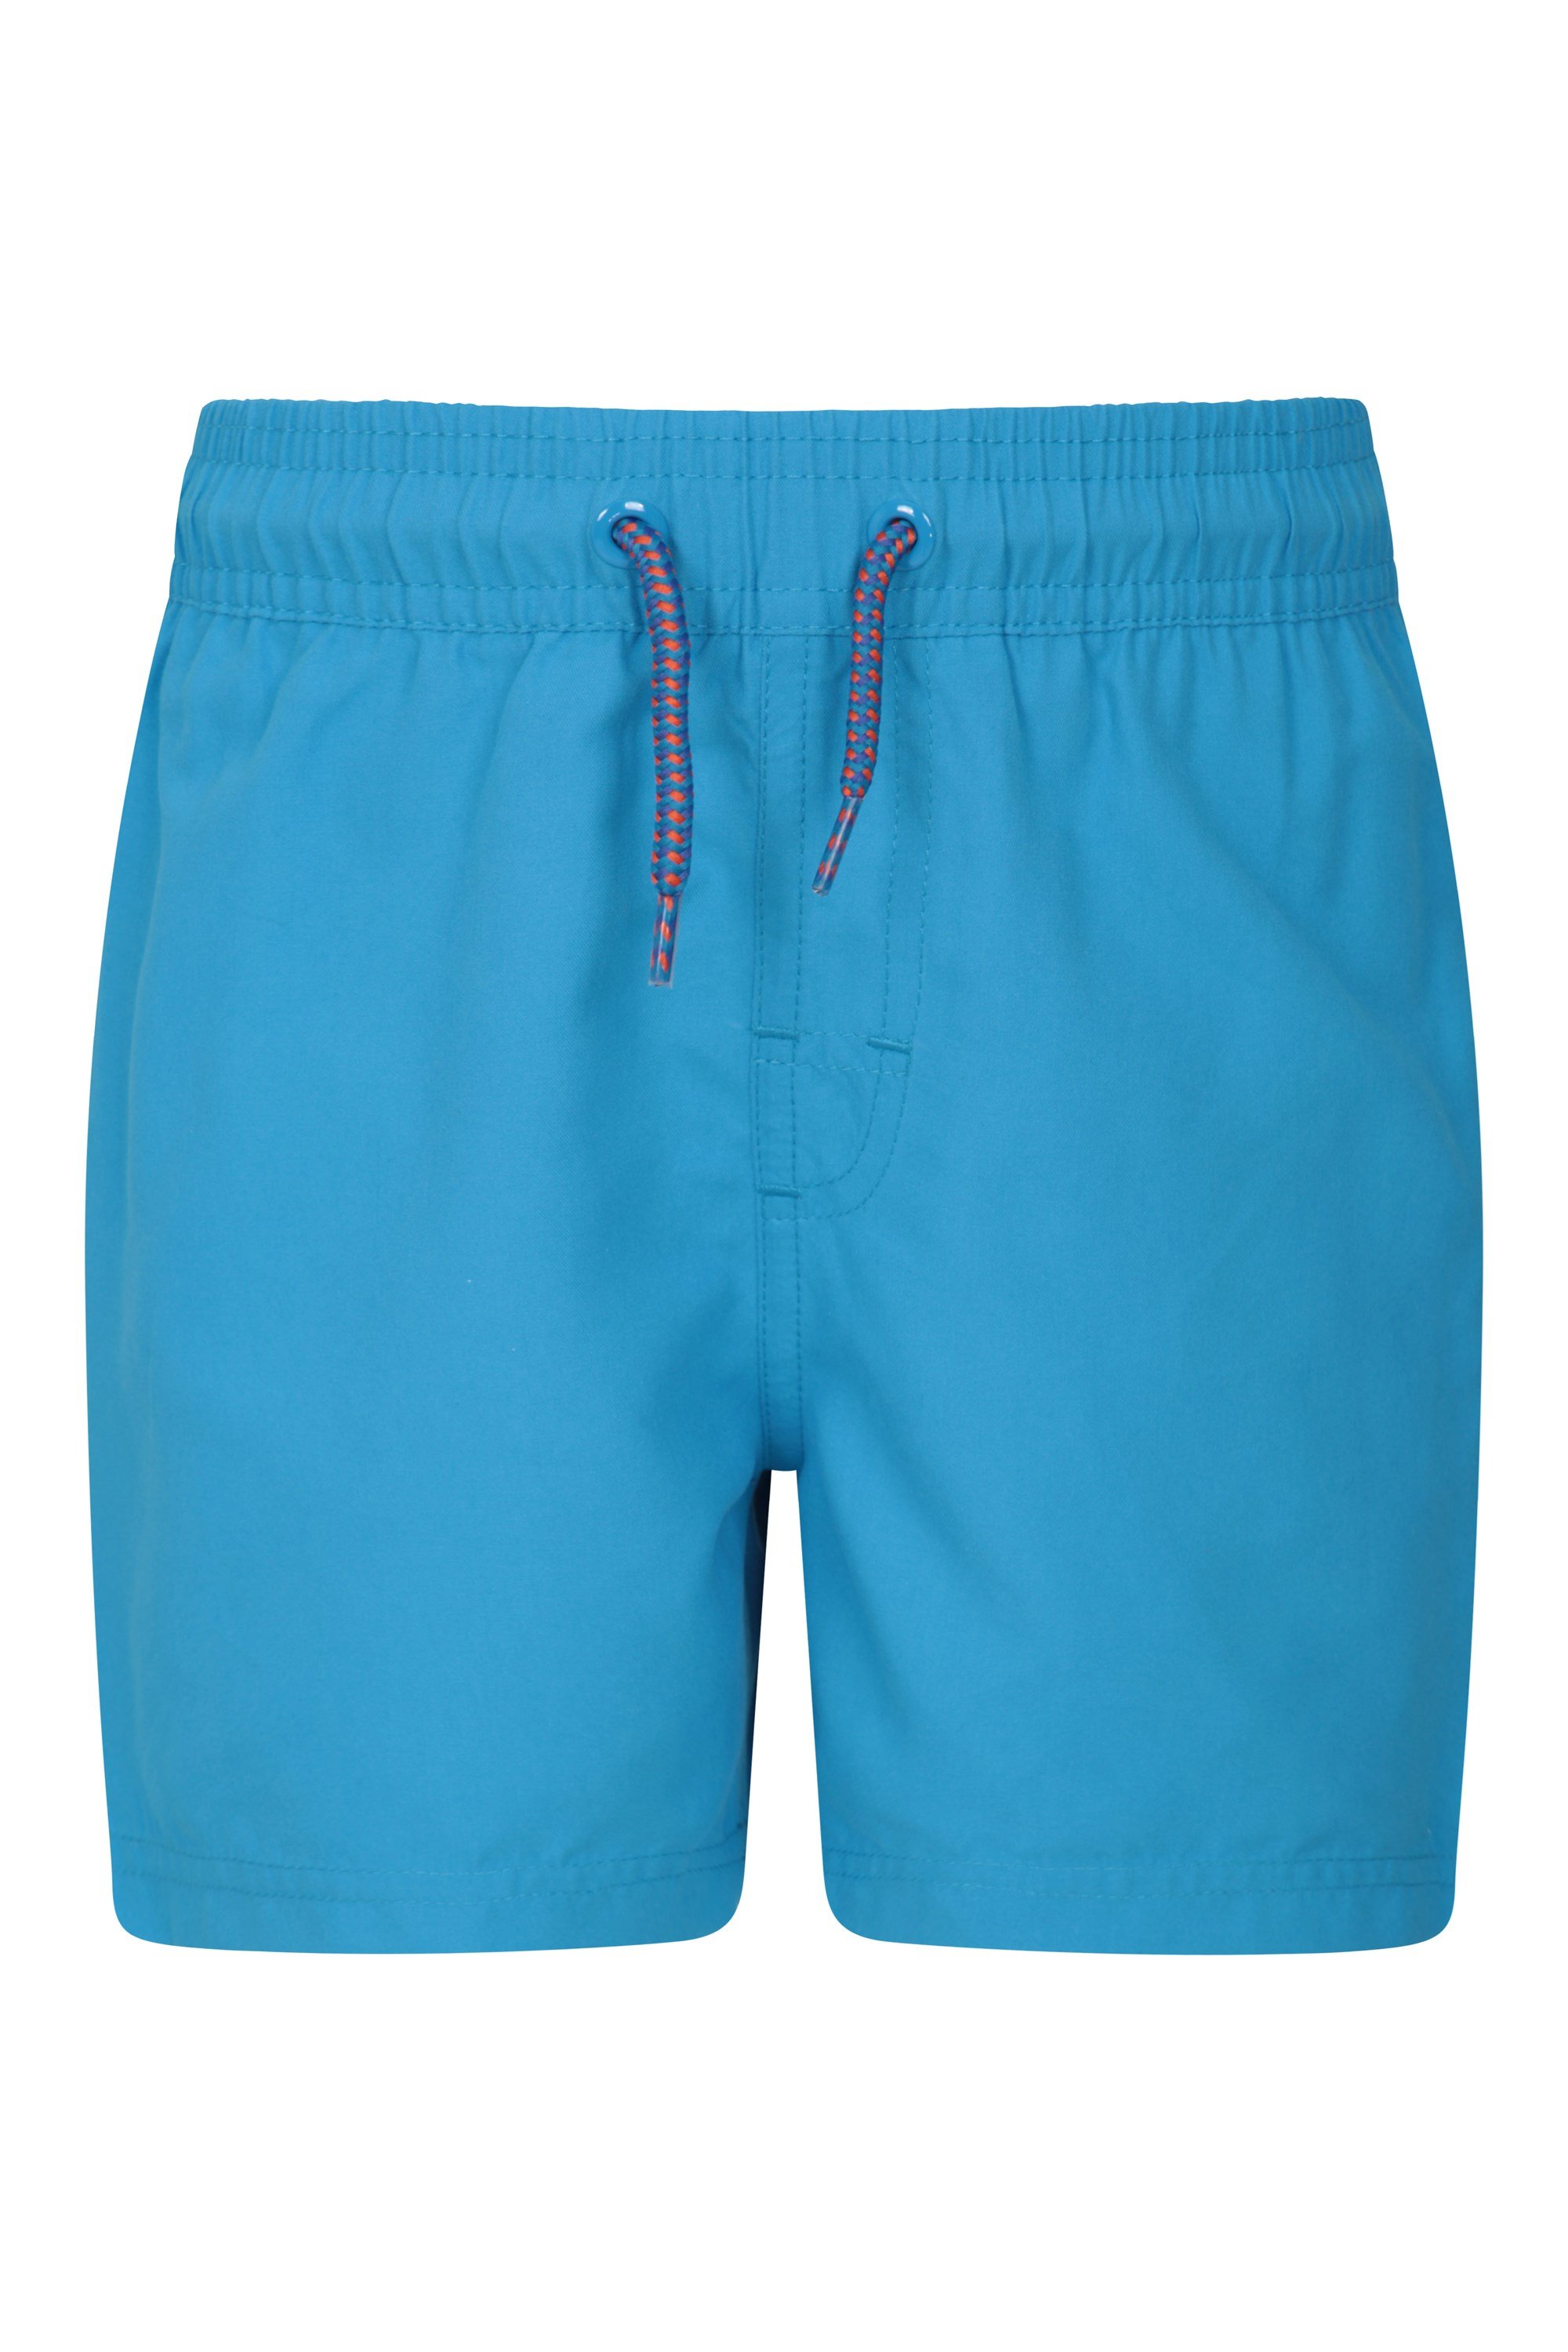 Aruba Kids Swim Shorts | Mountain Warehouse GB